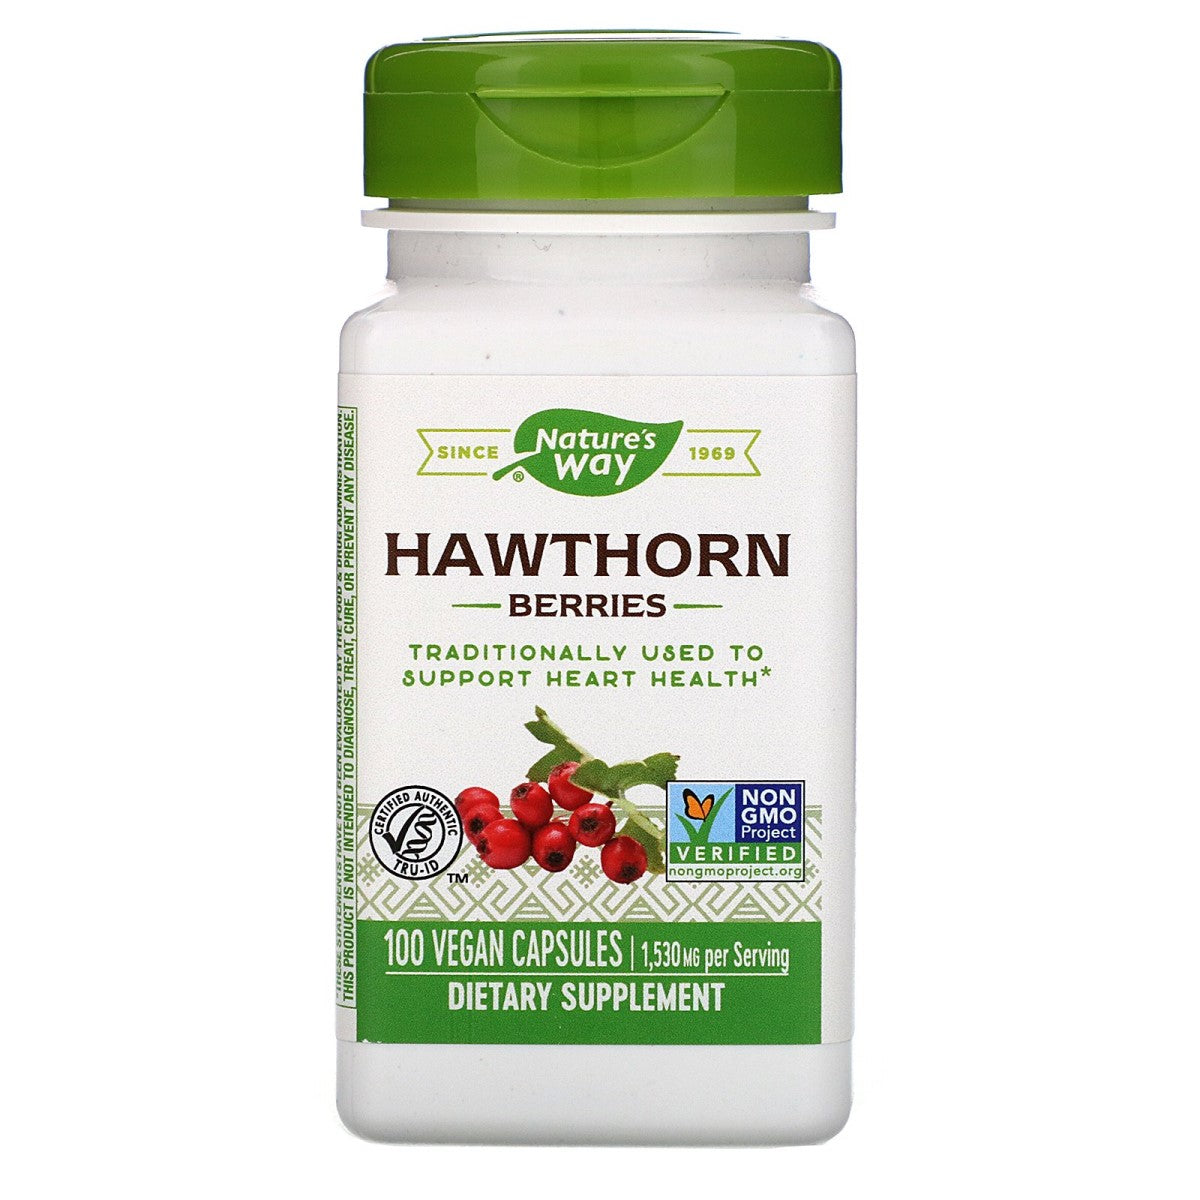 Primary image of Hawthorn Berries